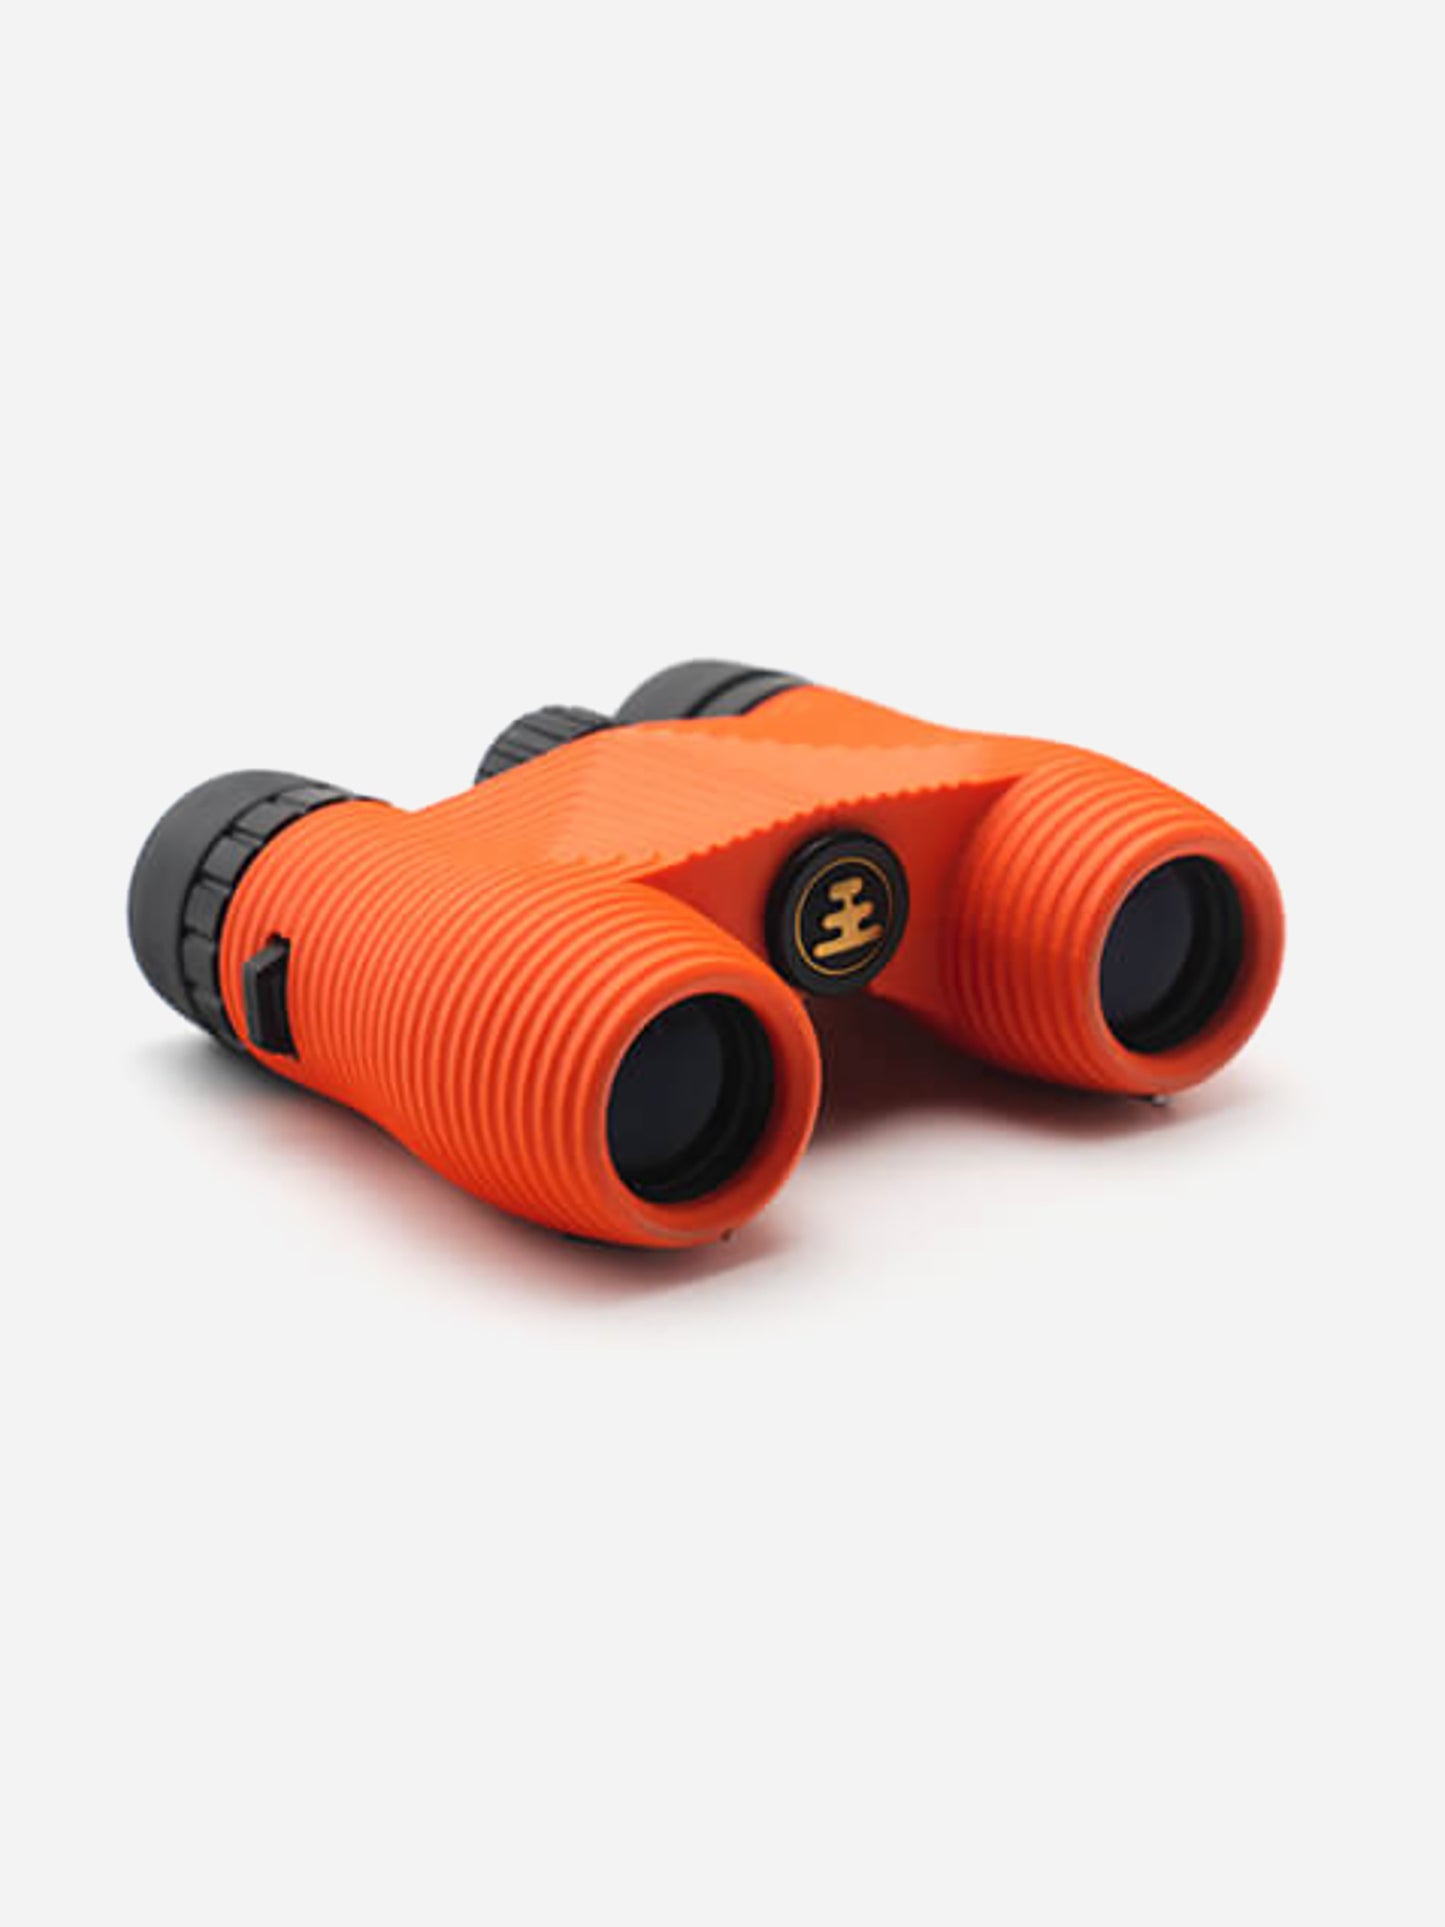 Nocs Provisions Standard Issue 8X Waterproof Binoculars